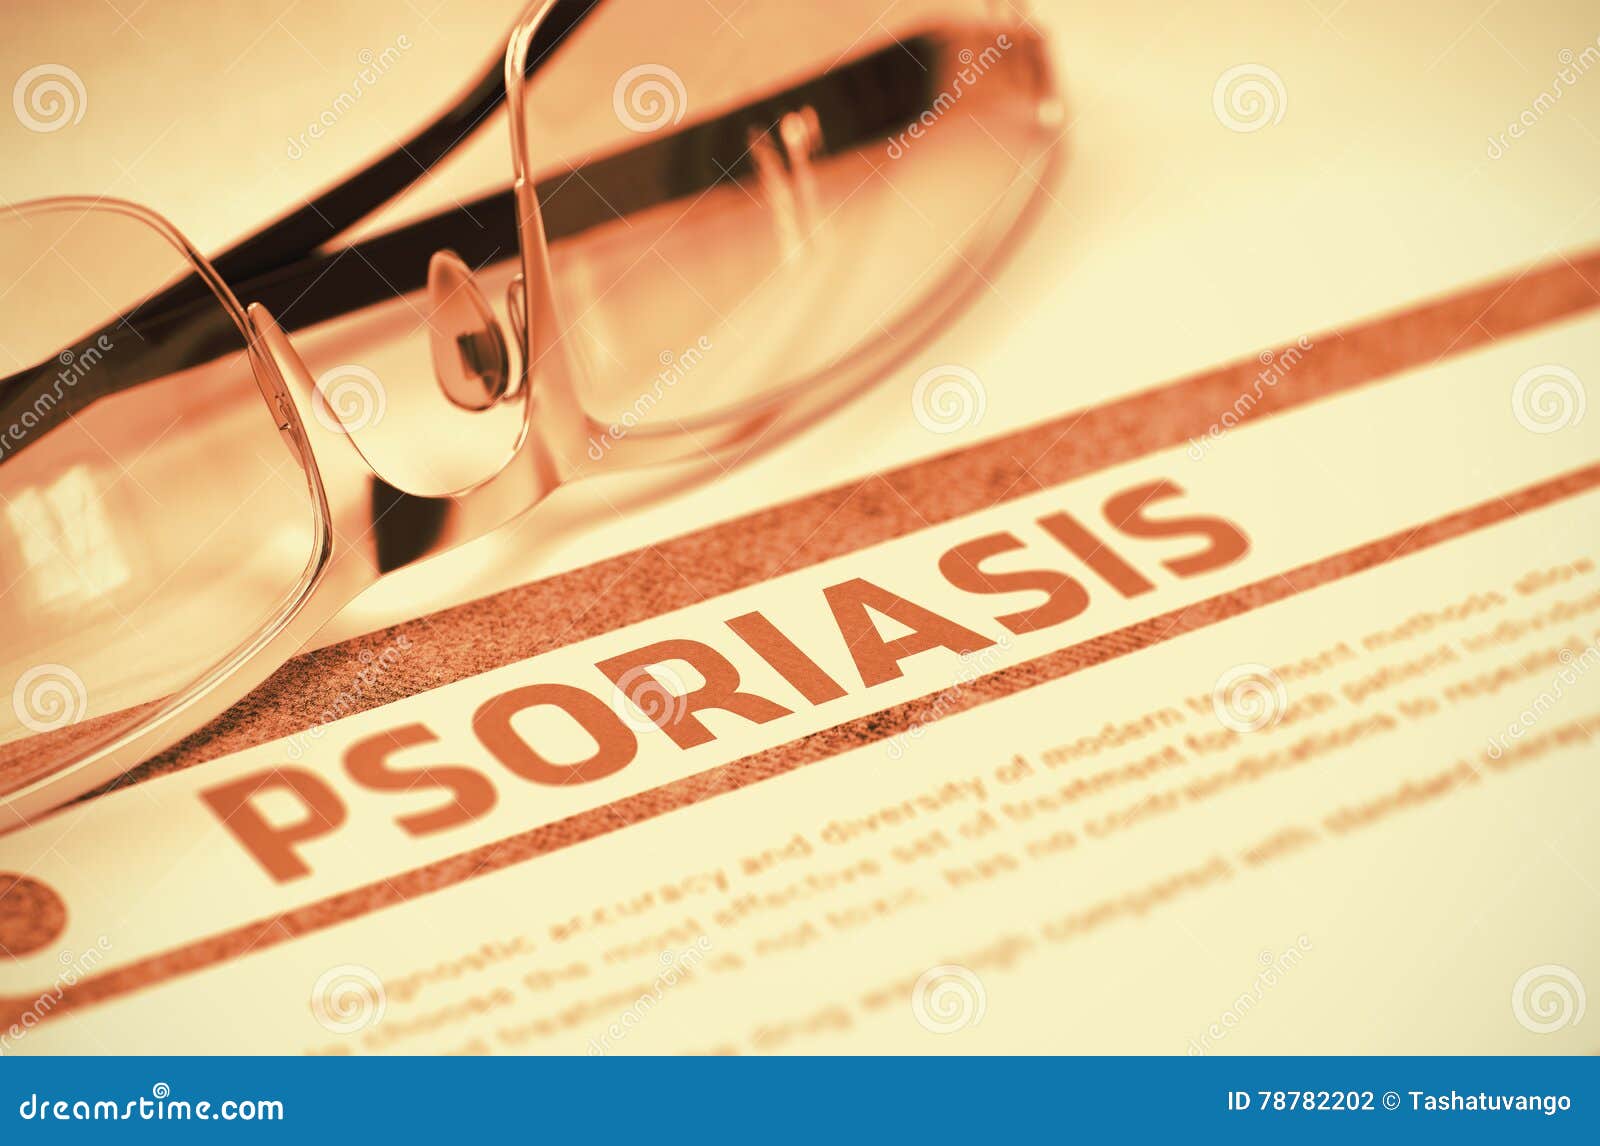 free psoriasis medicine)